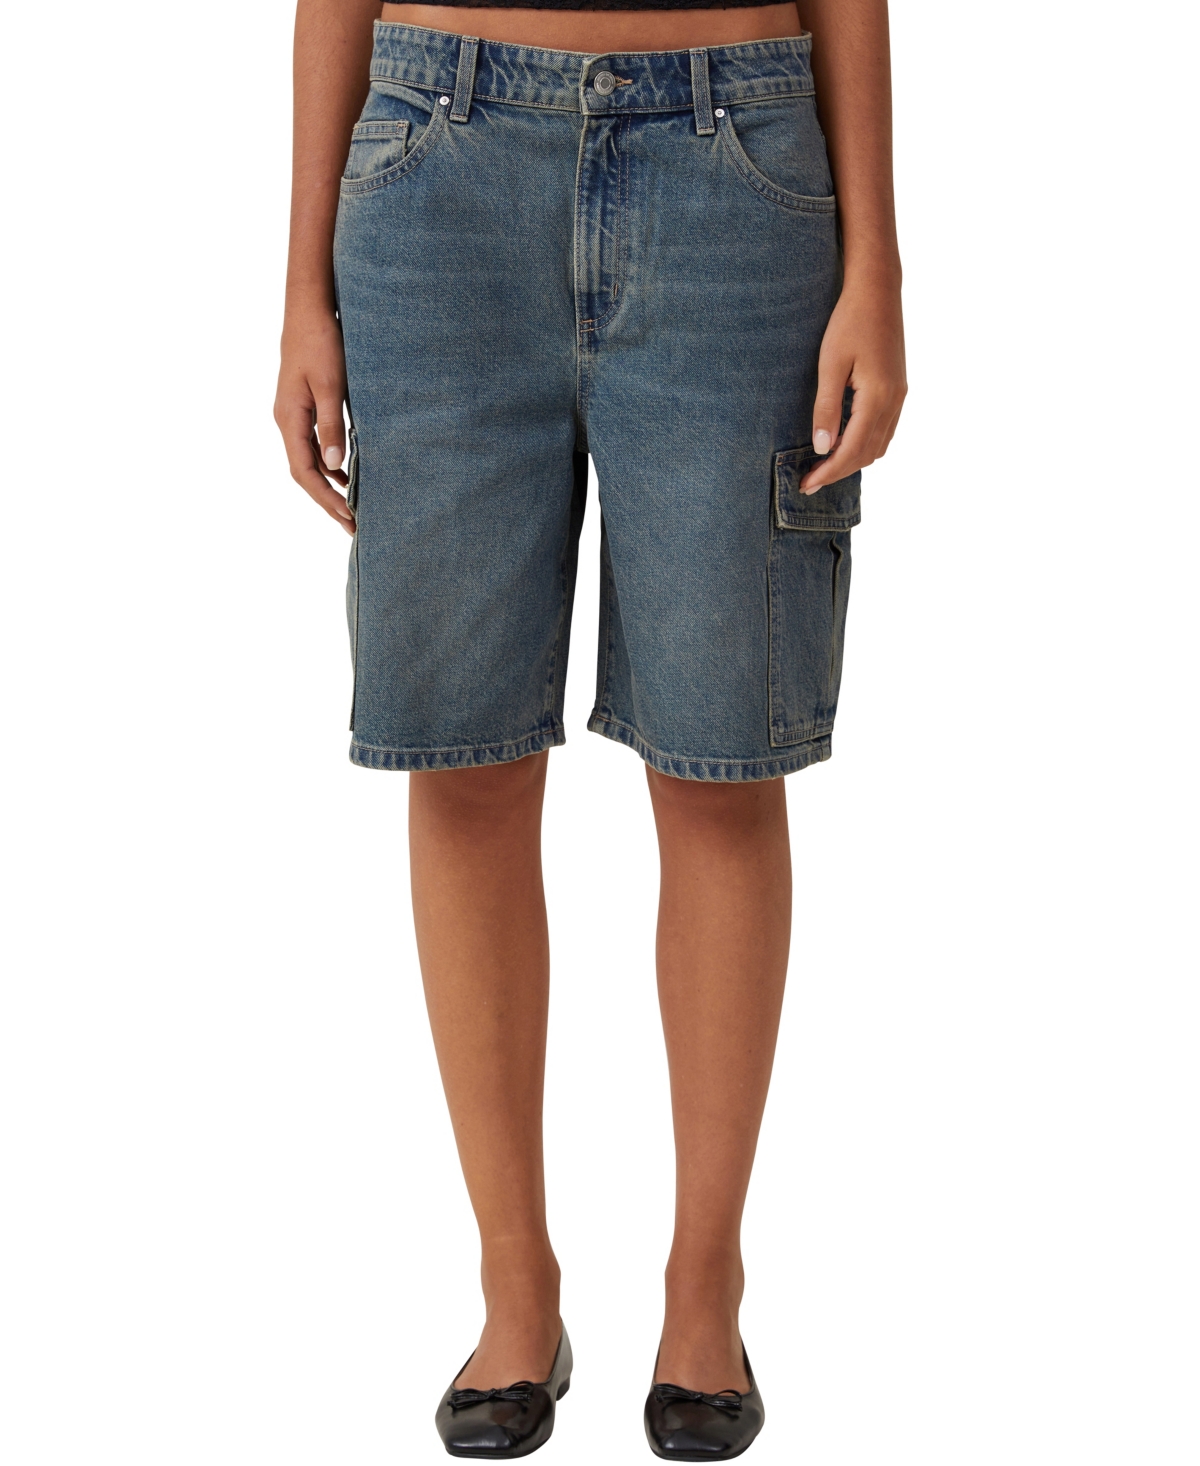 Cotton On Women's Super Baggy Cargo Denim Jort Shorts In Blue